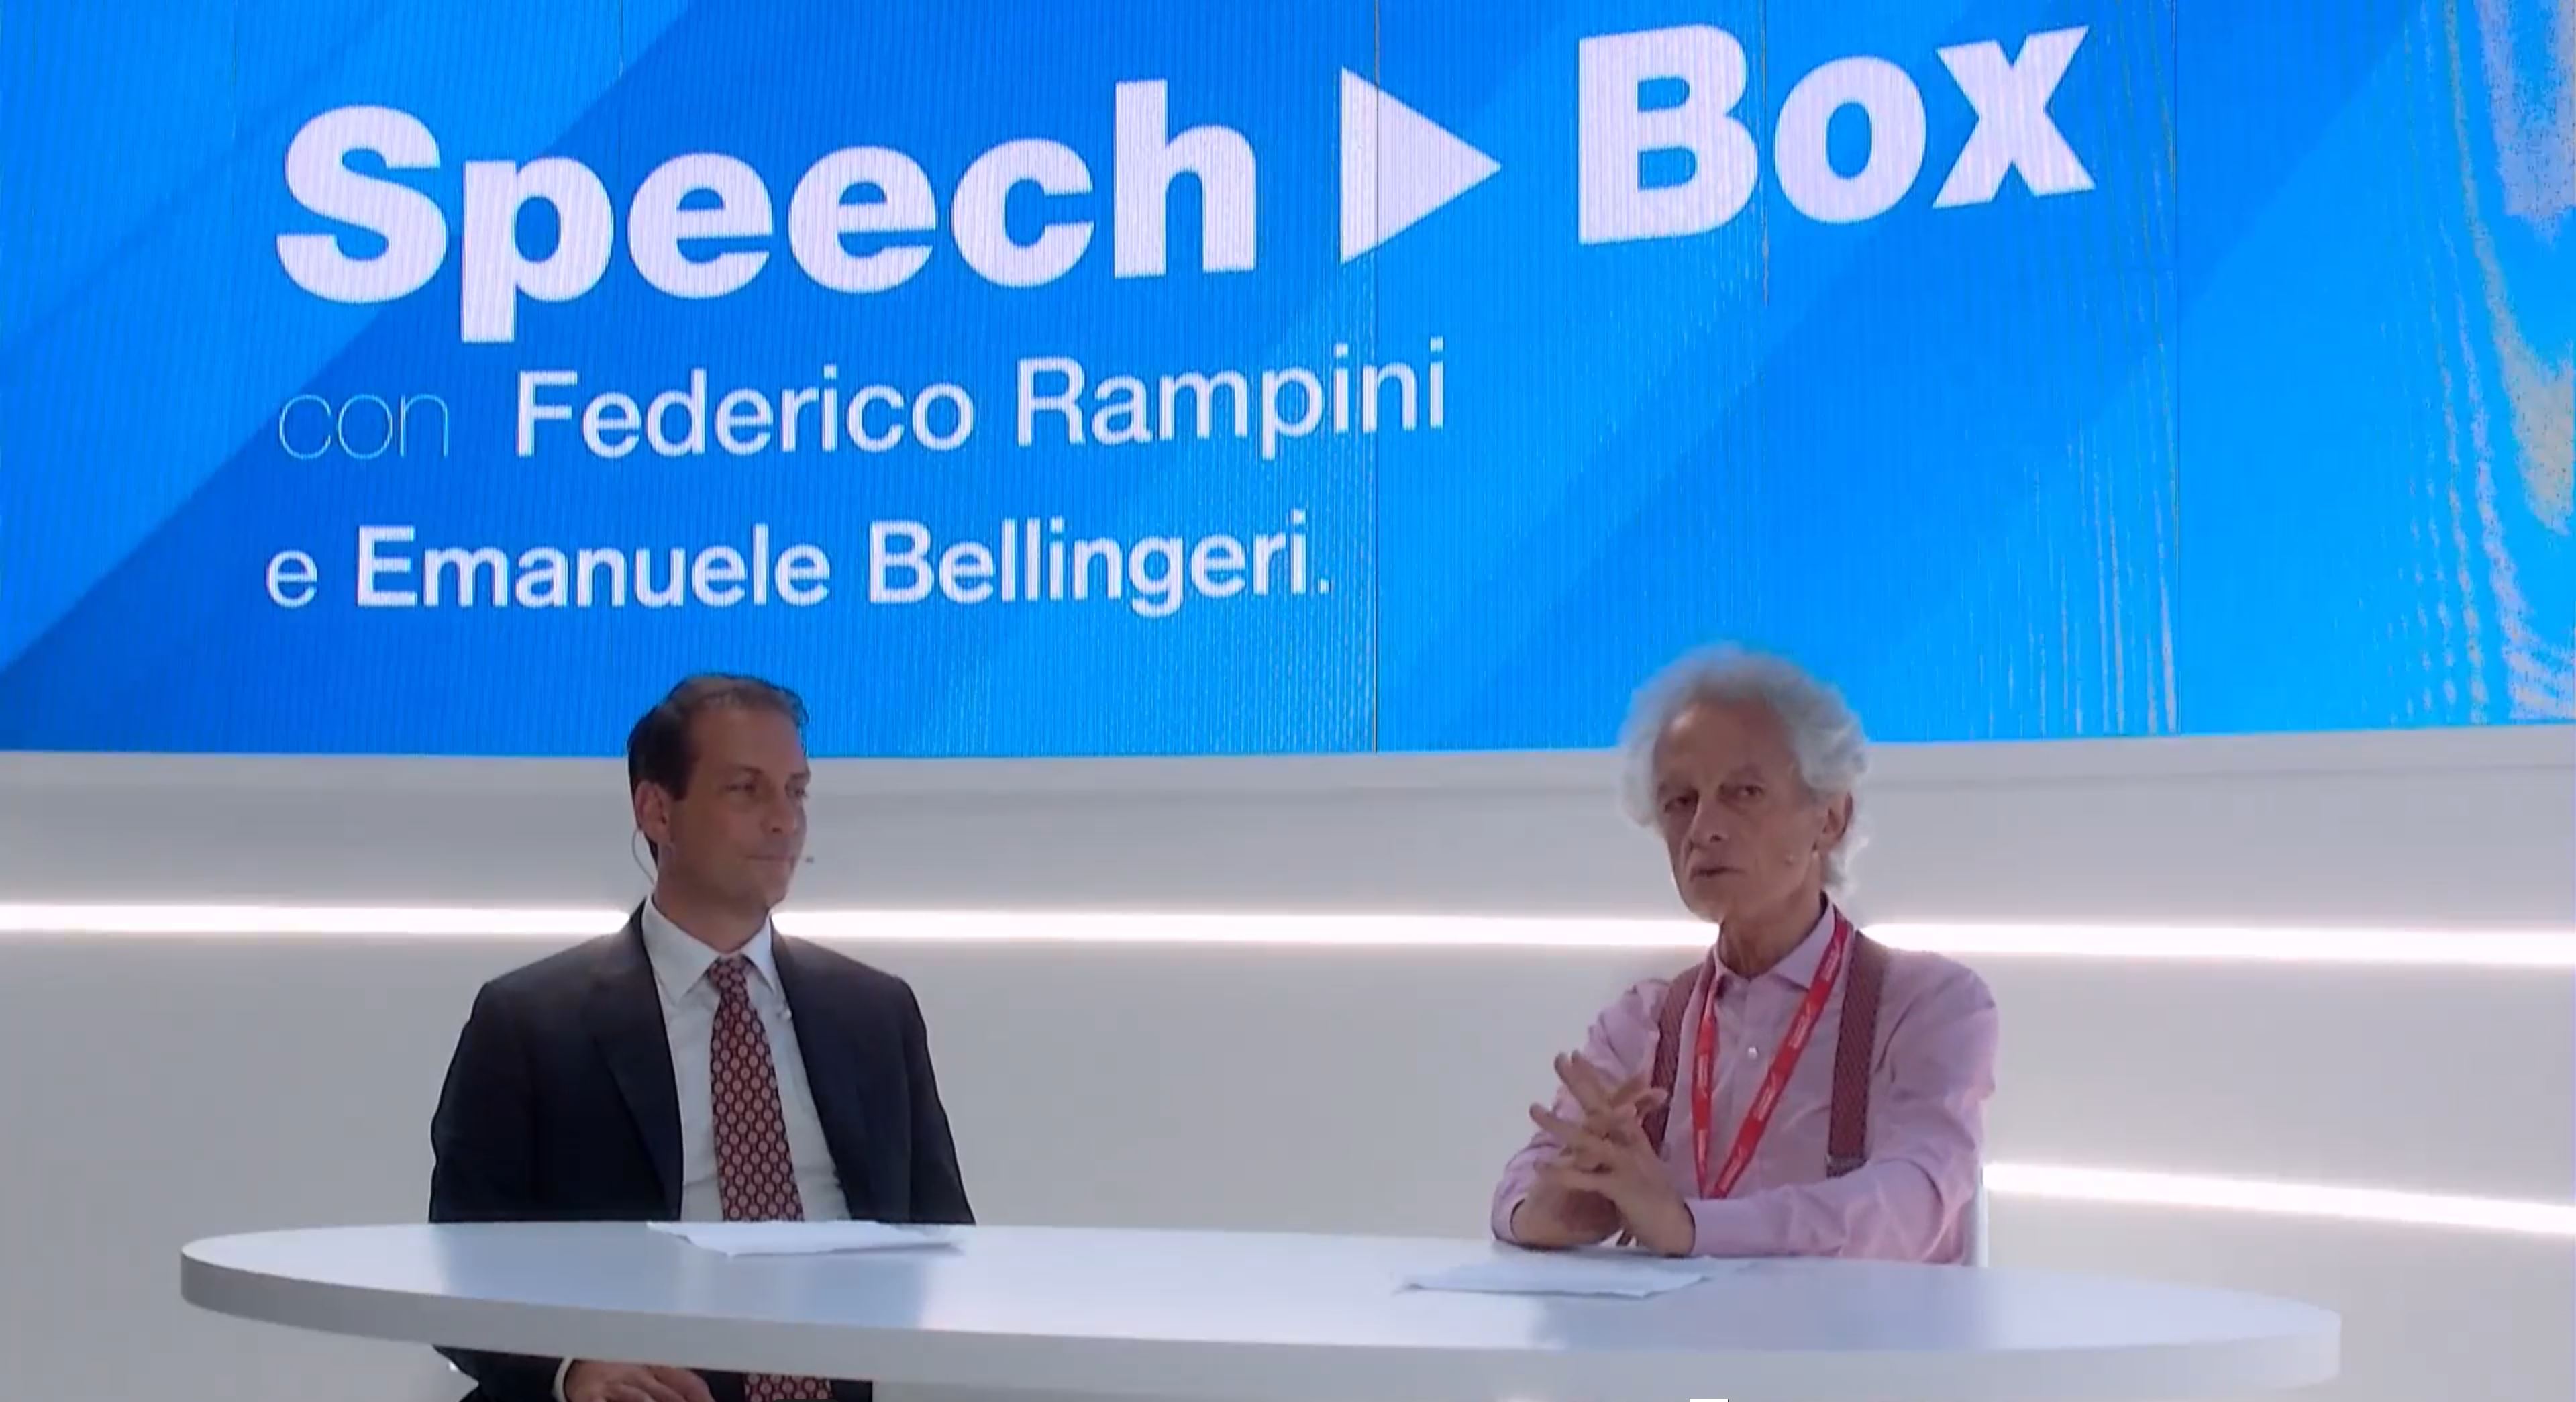 financialounge -  Credit Suisse educazione finanziaria Emanuele Bellingeri Federico Rampini SpeechBox